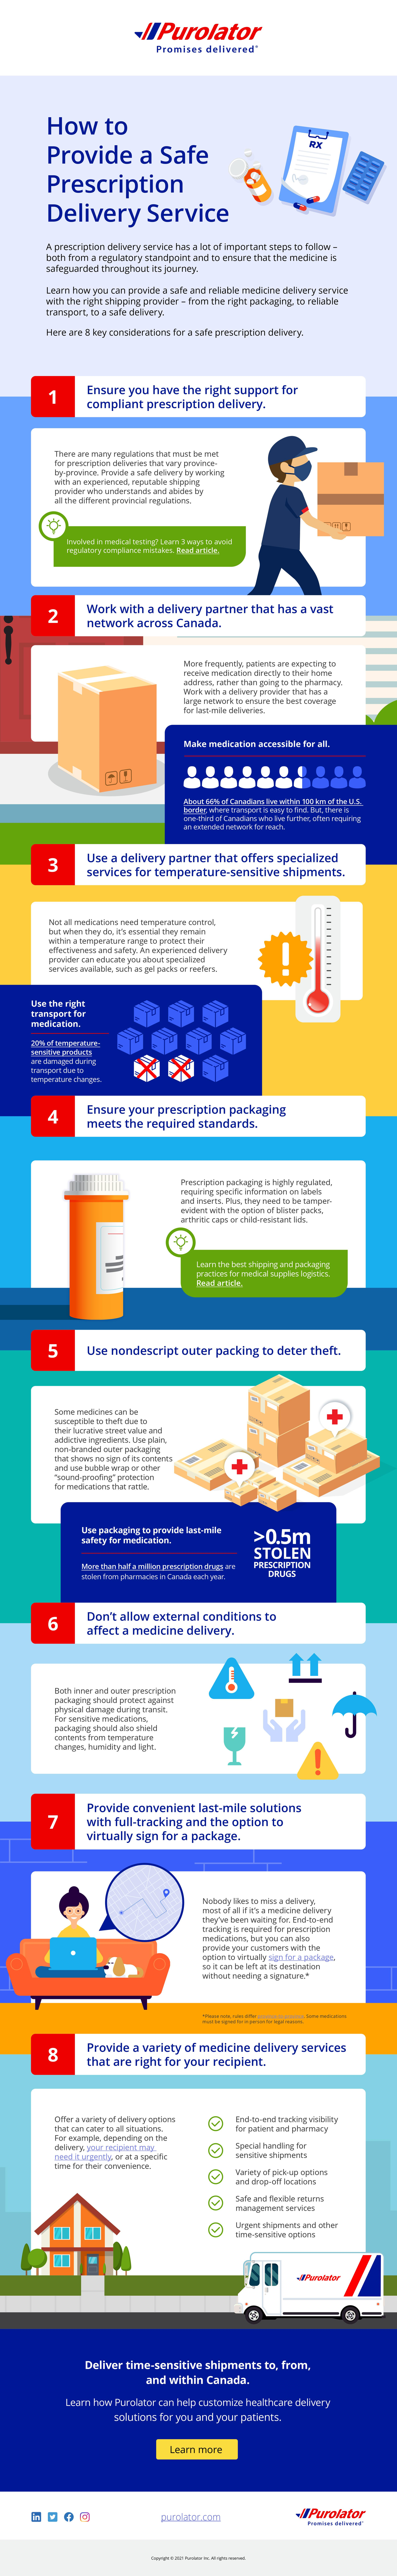 Purolator How to provide a safe prescription delivery service Infographic